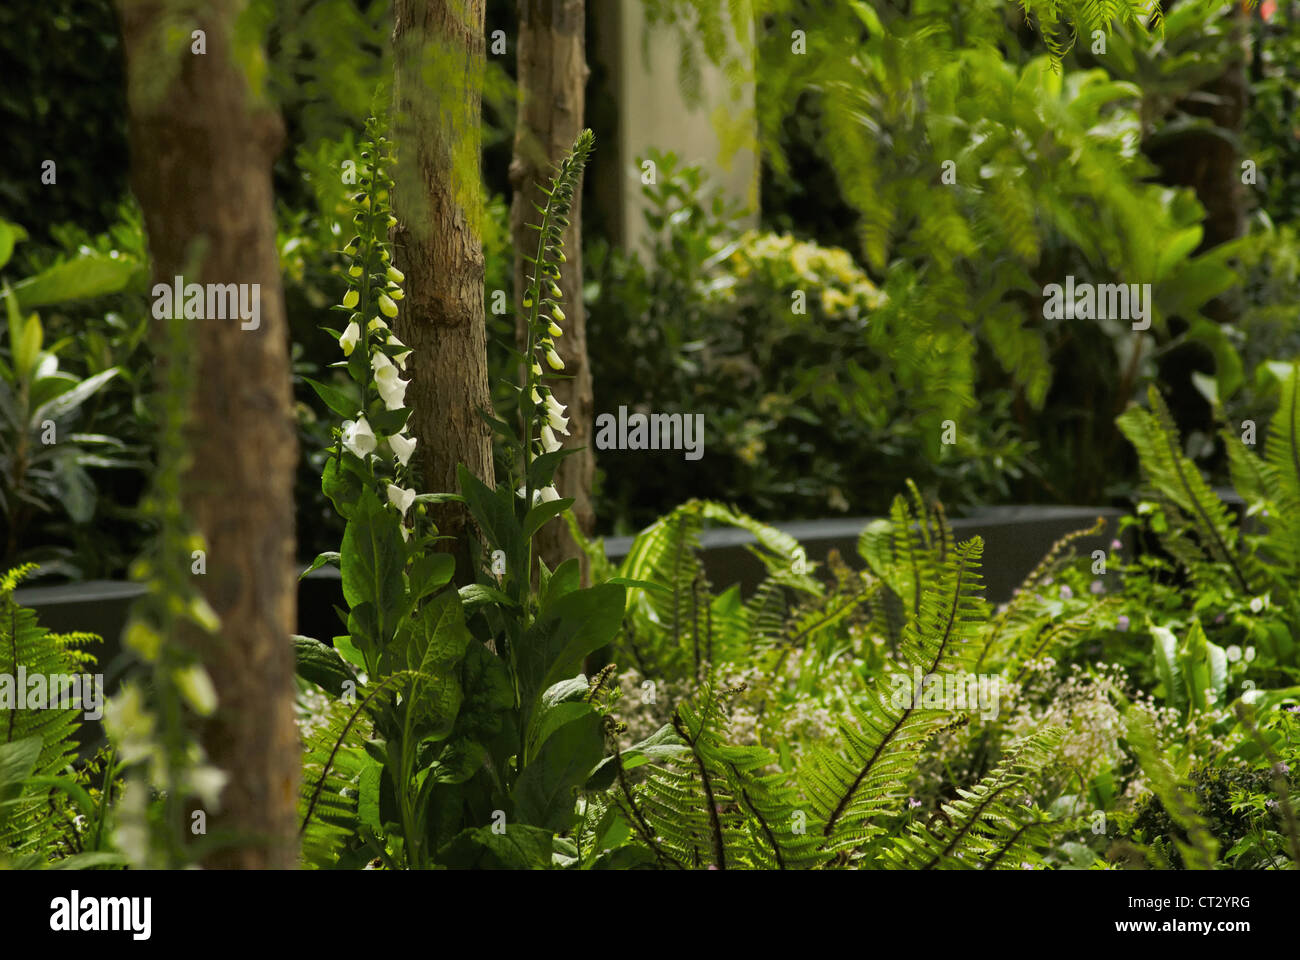 Digitalis purpurea albiflora, Foxglove Stock Photo